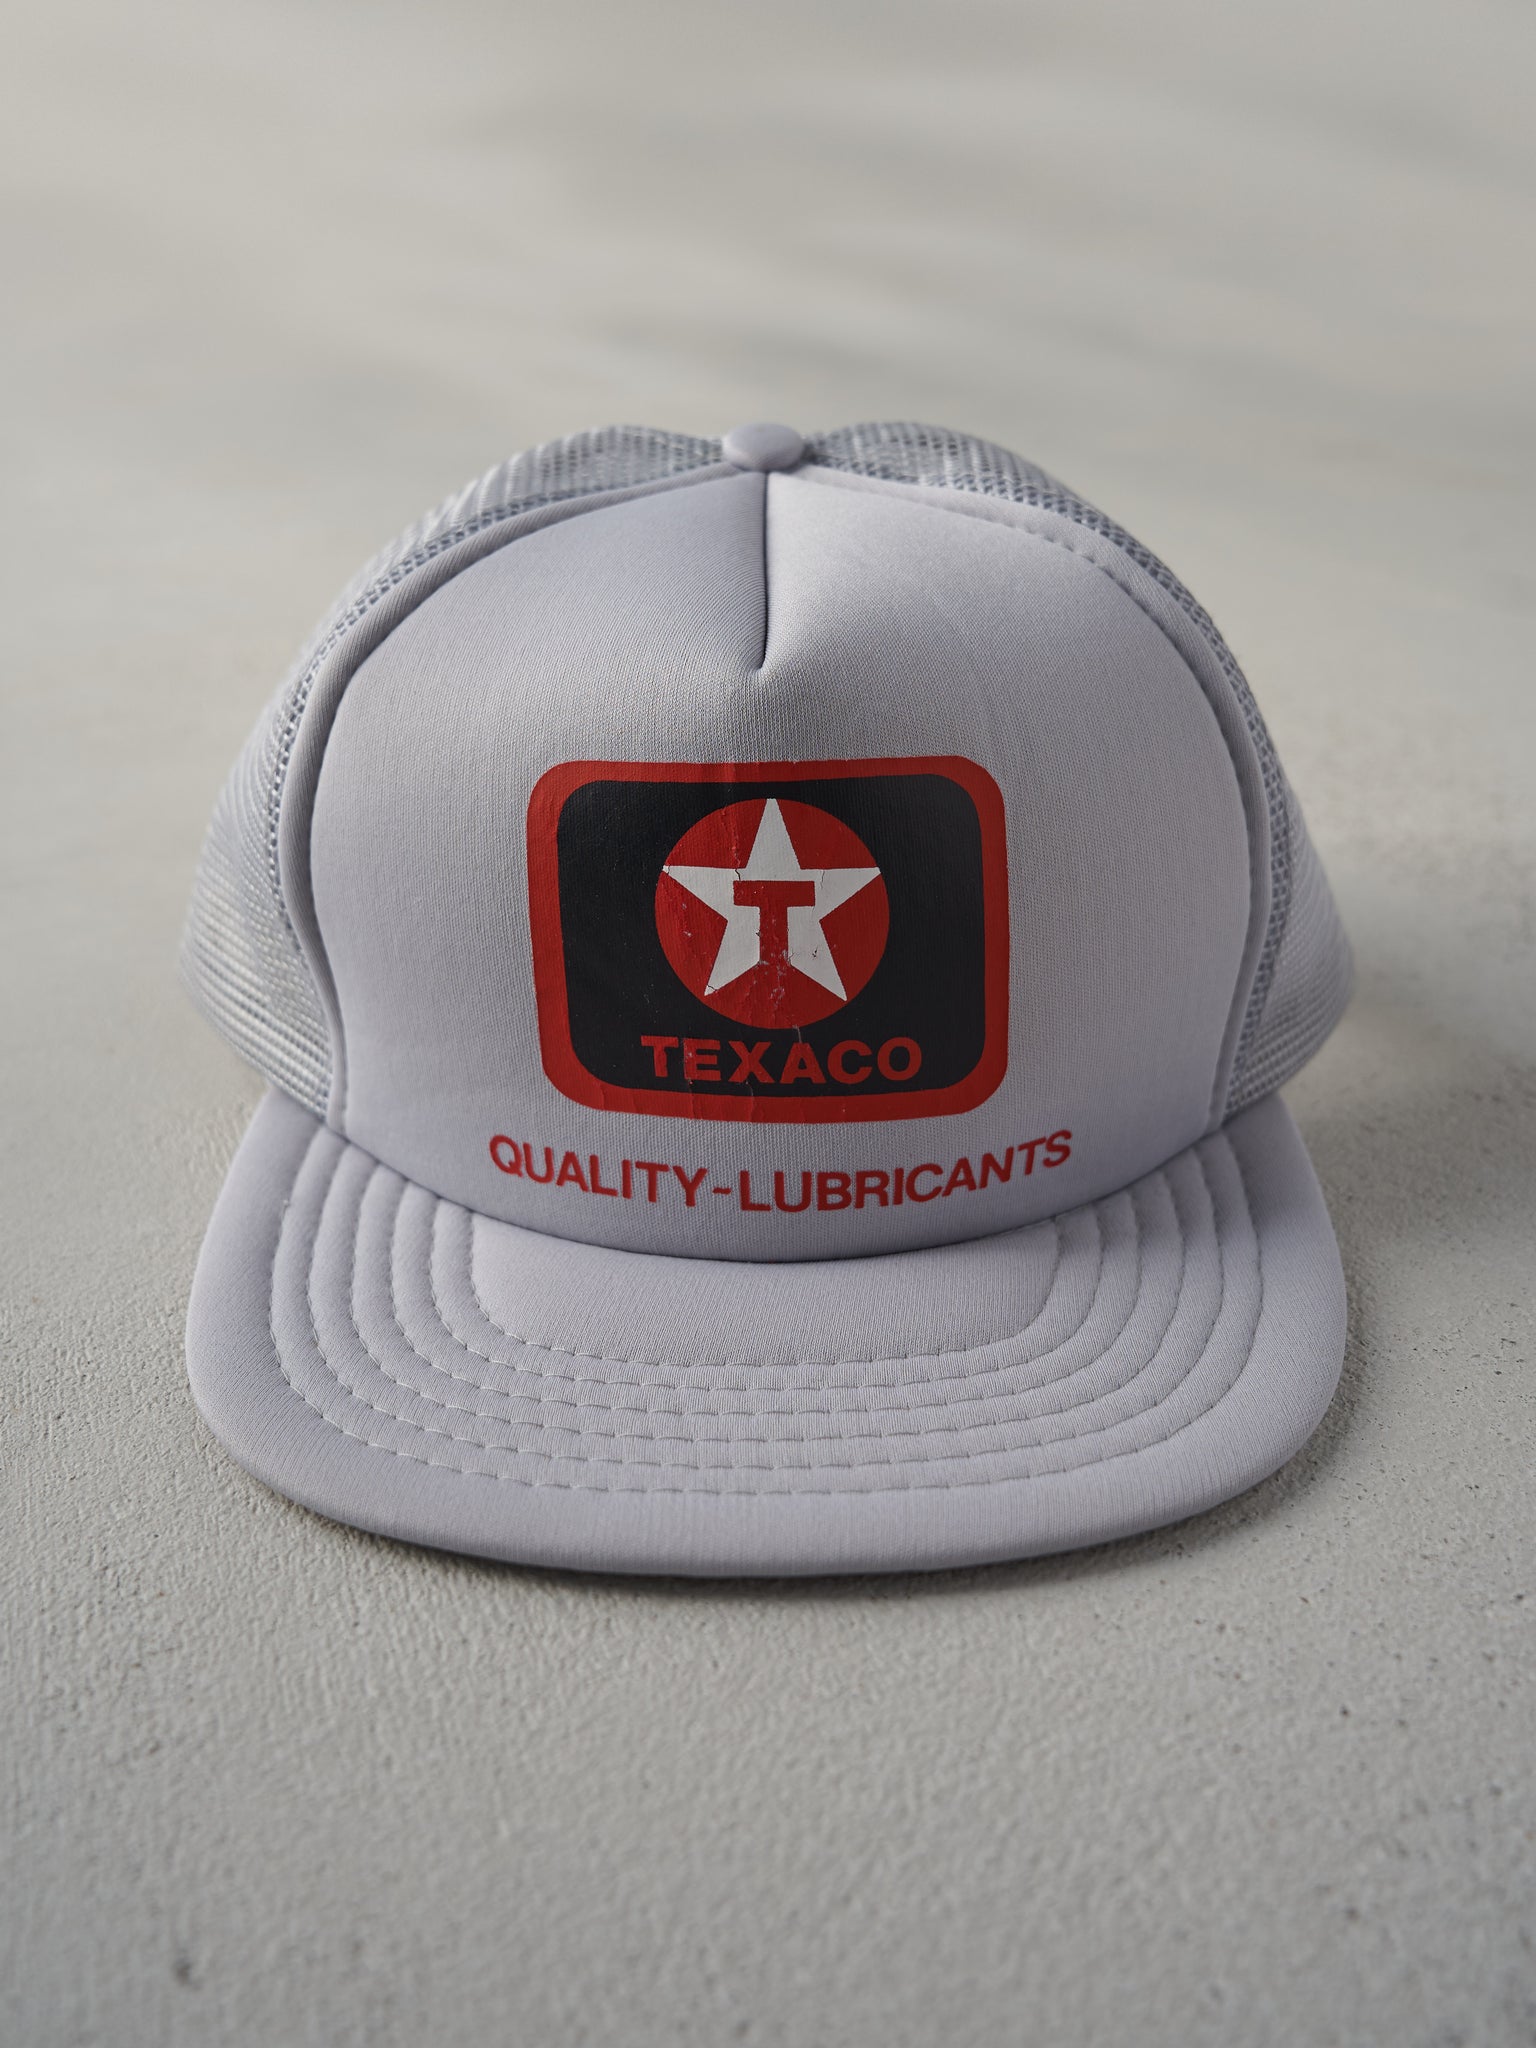 Vintage 80s Grey Texaco Trucker Snapback Hat